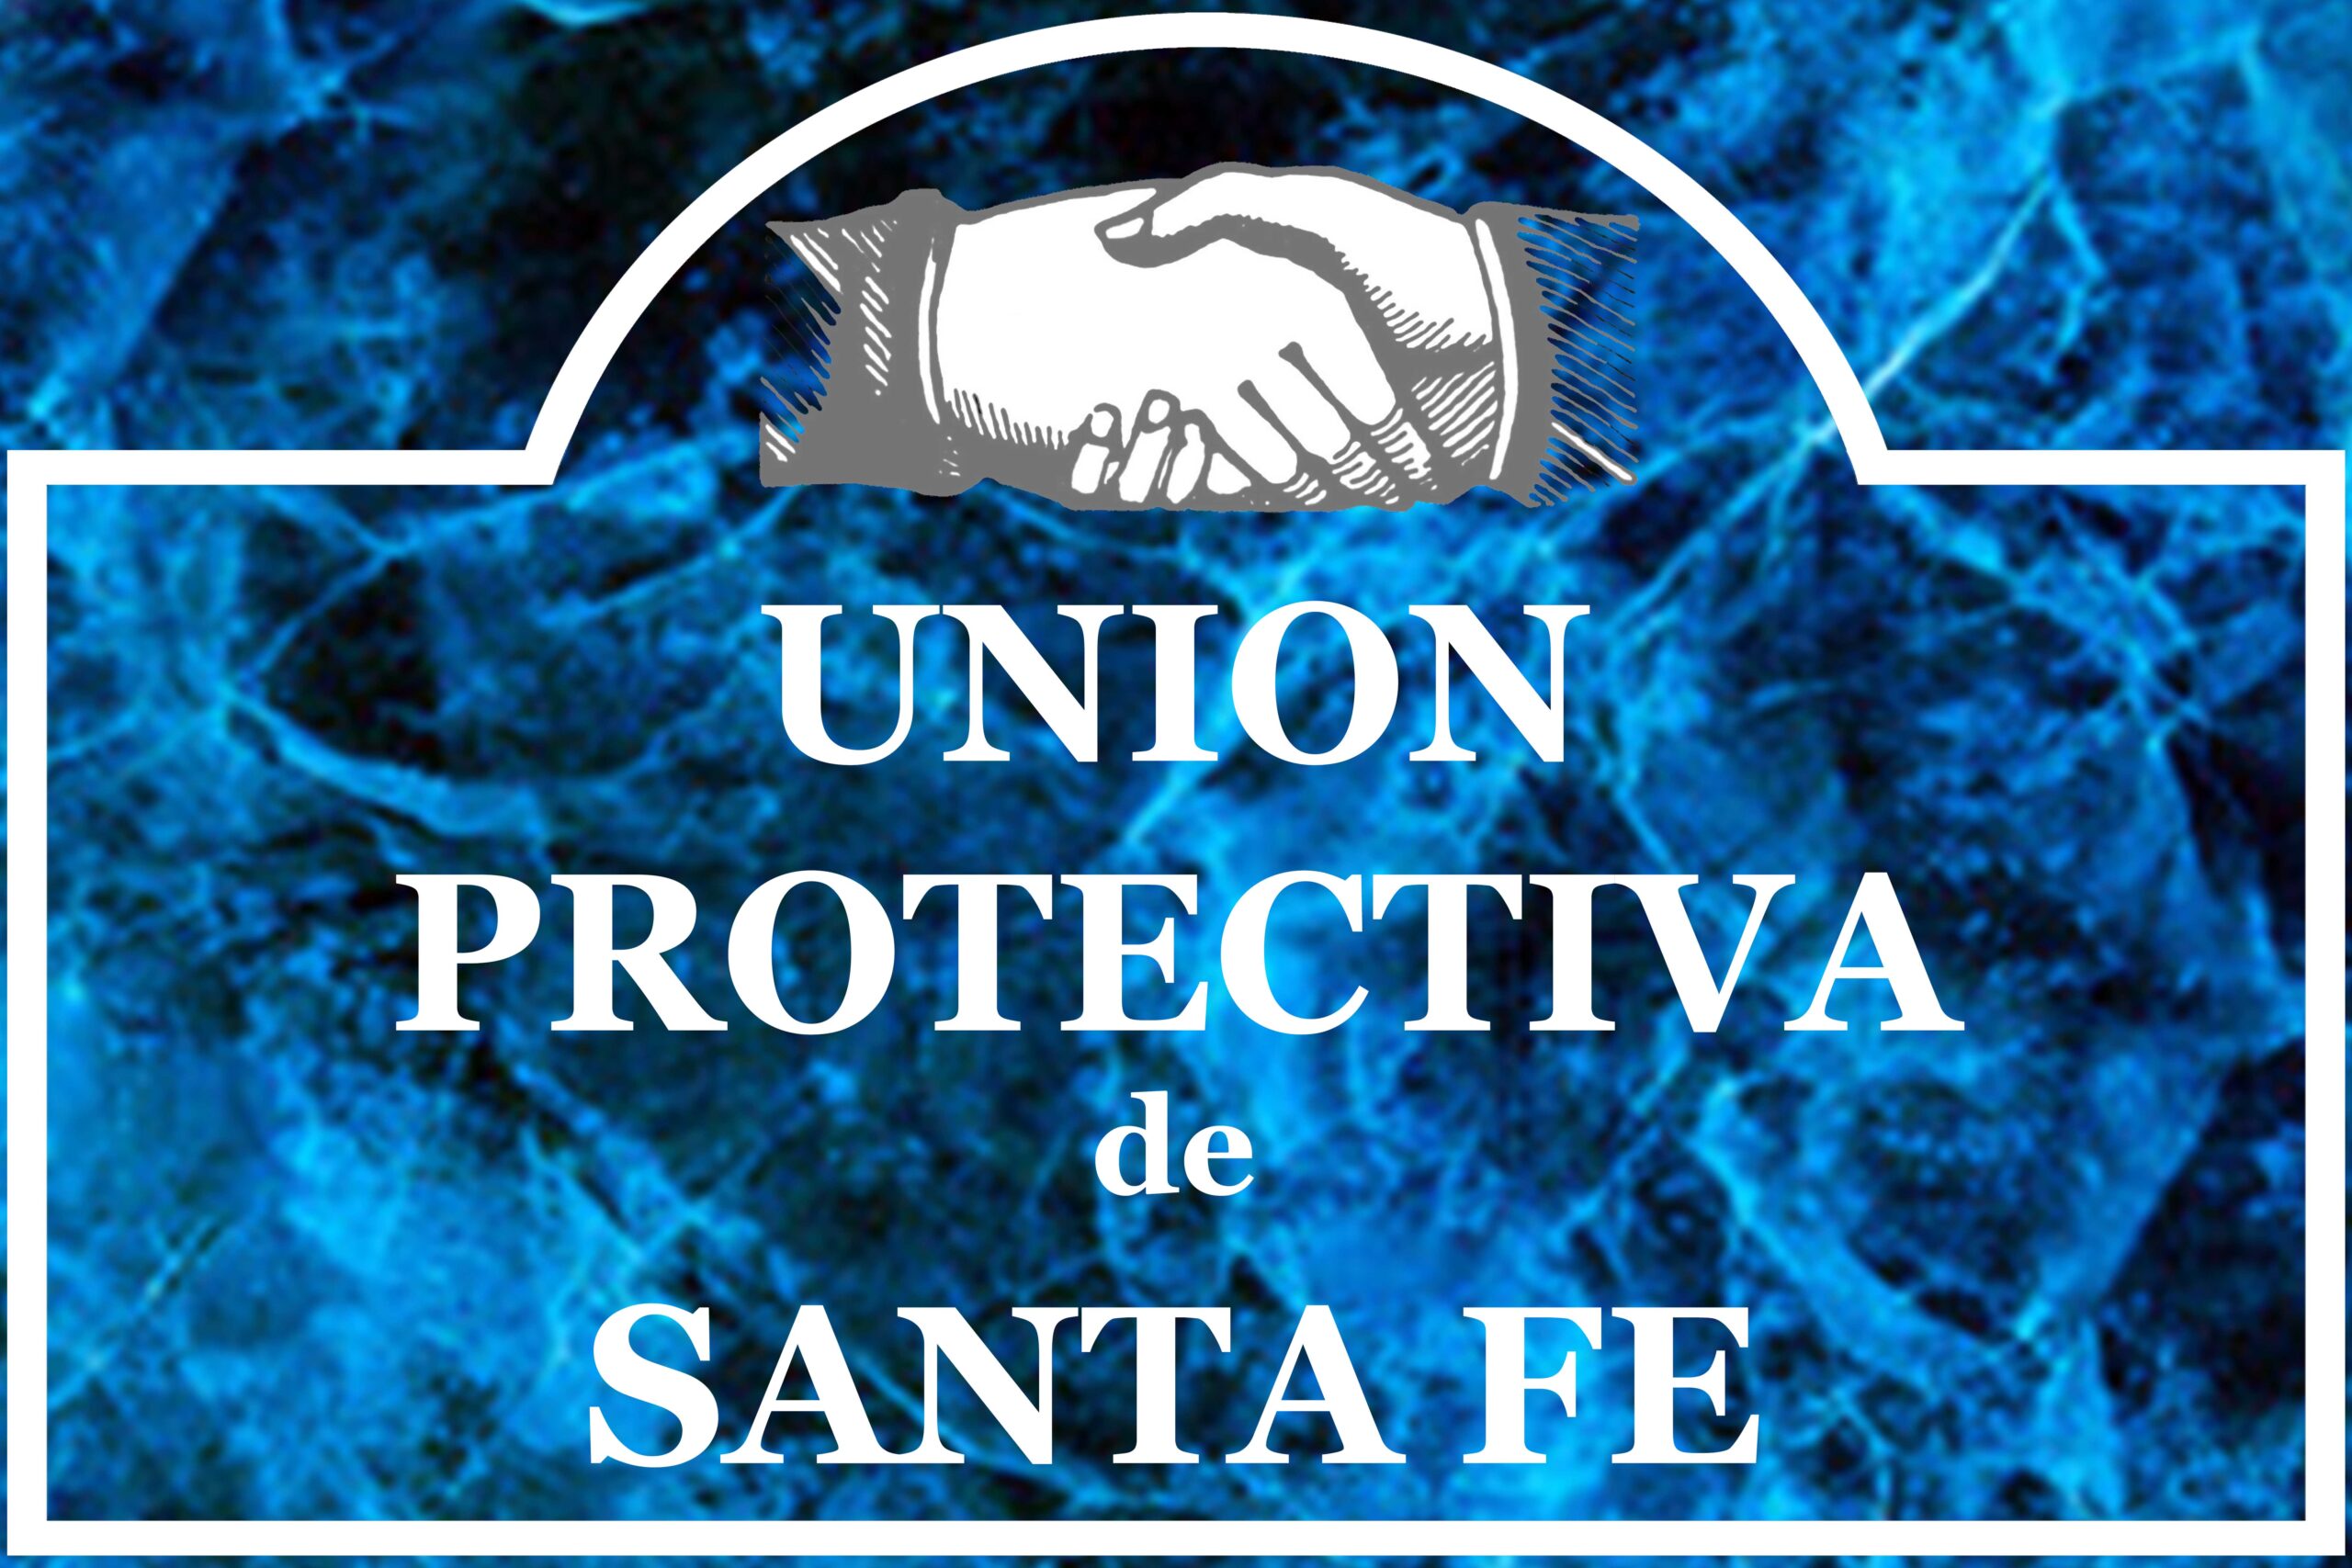 Union Protectiva de Santa Fe Nuevo Mejico